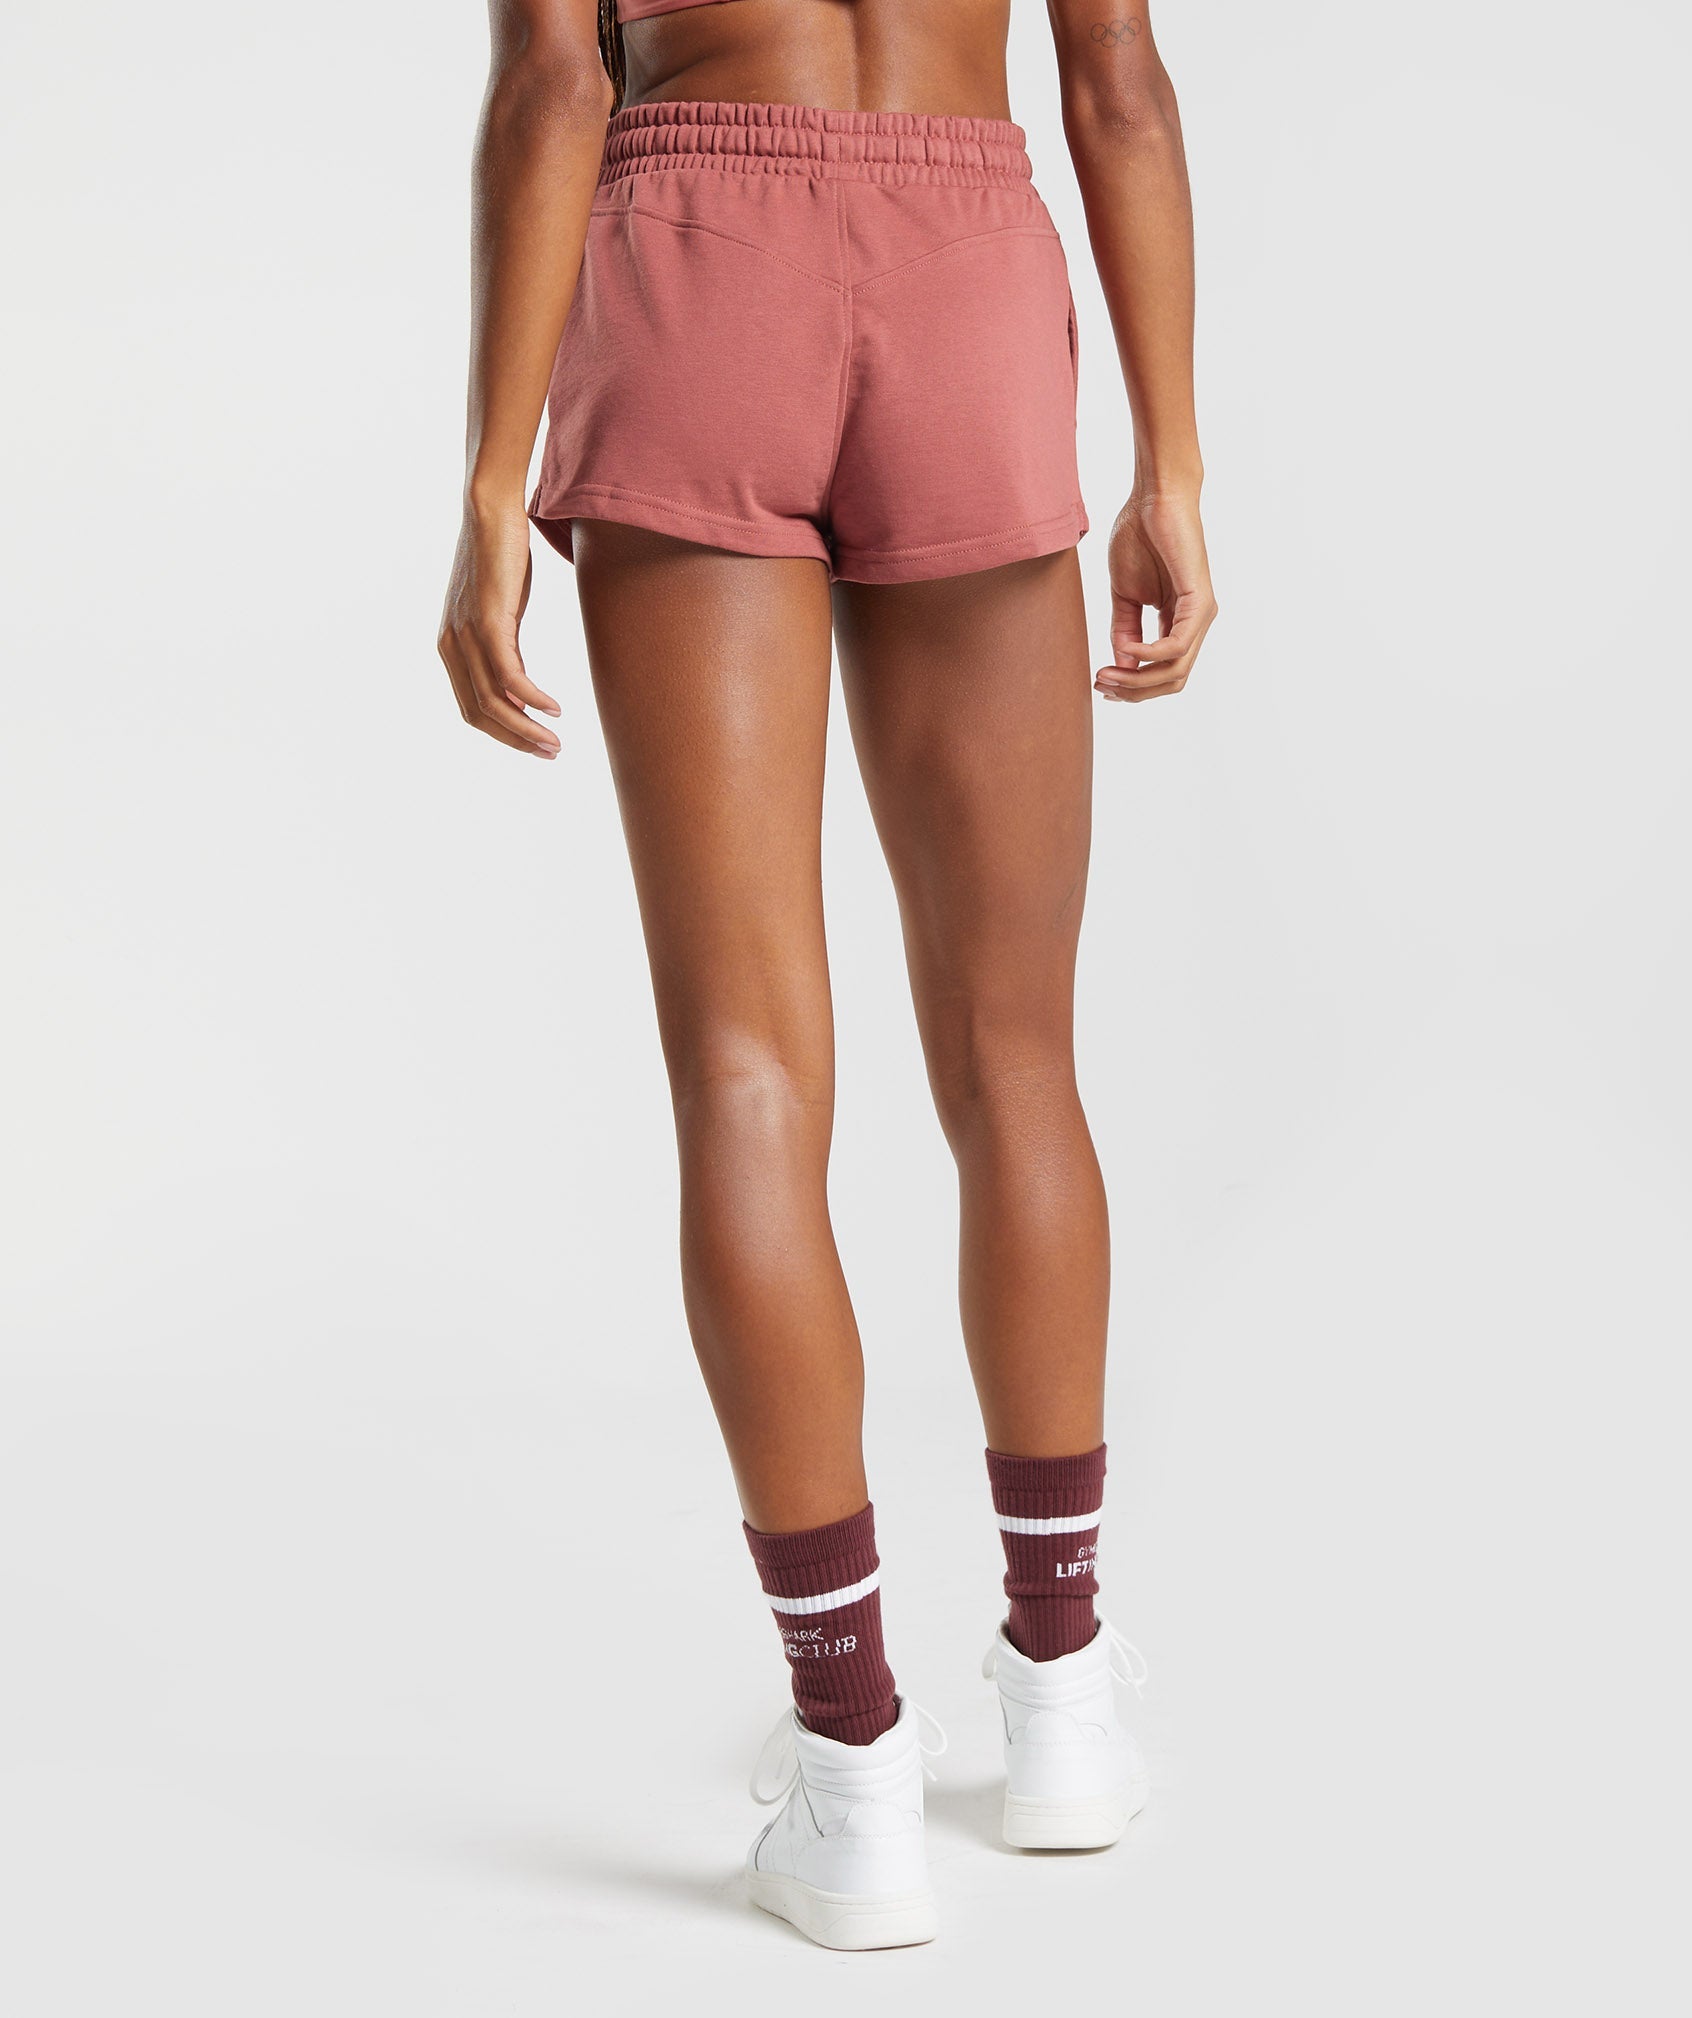 Gymshark Woven Pocket Shorts - Plum Pink